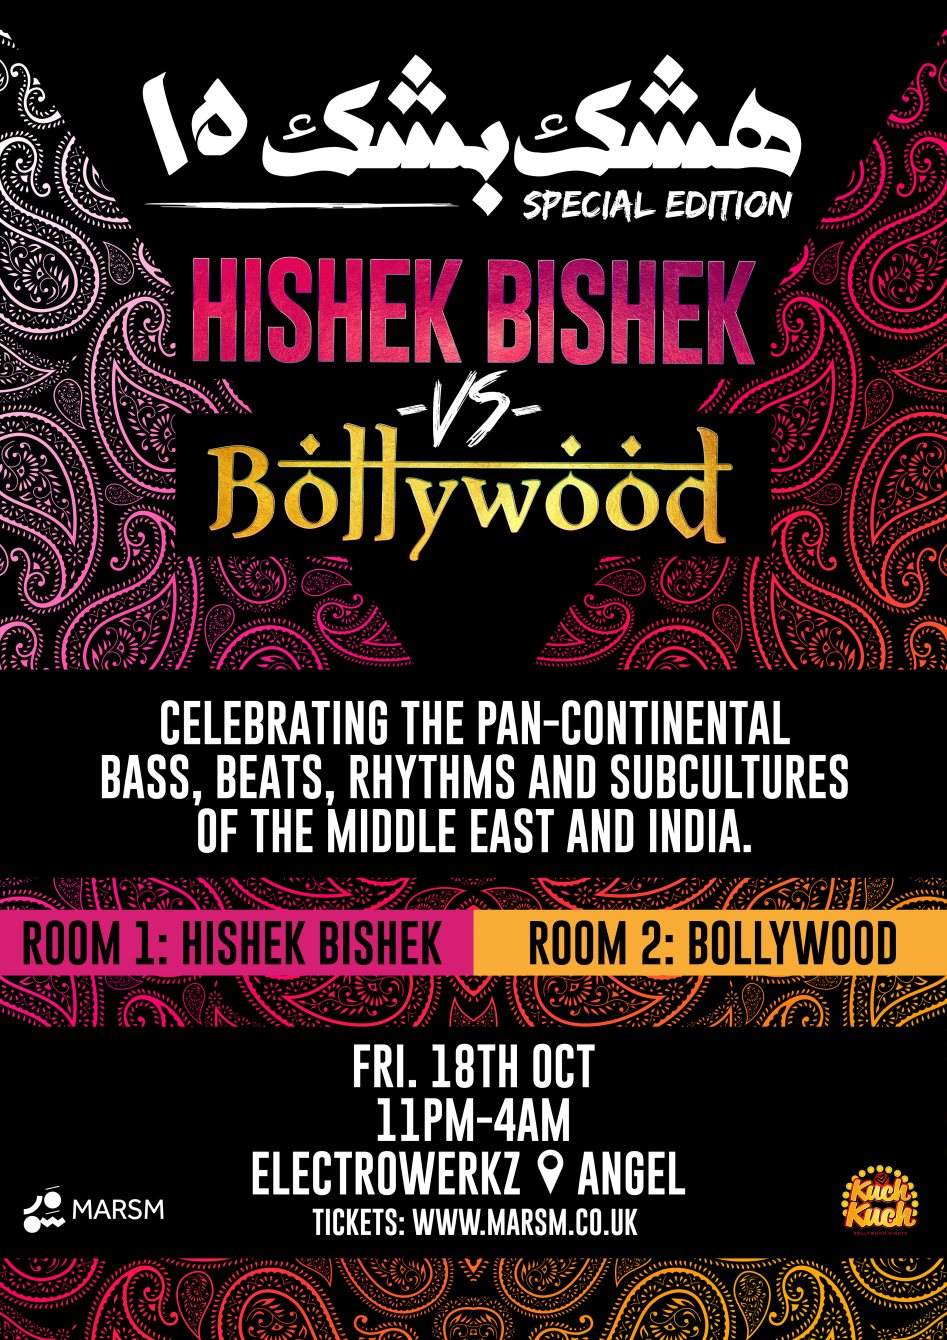 Hishek Bishek VS Bollywood (Middle East to Mumbai Beats) at